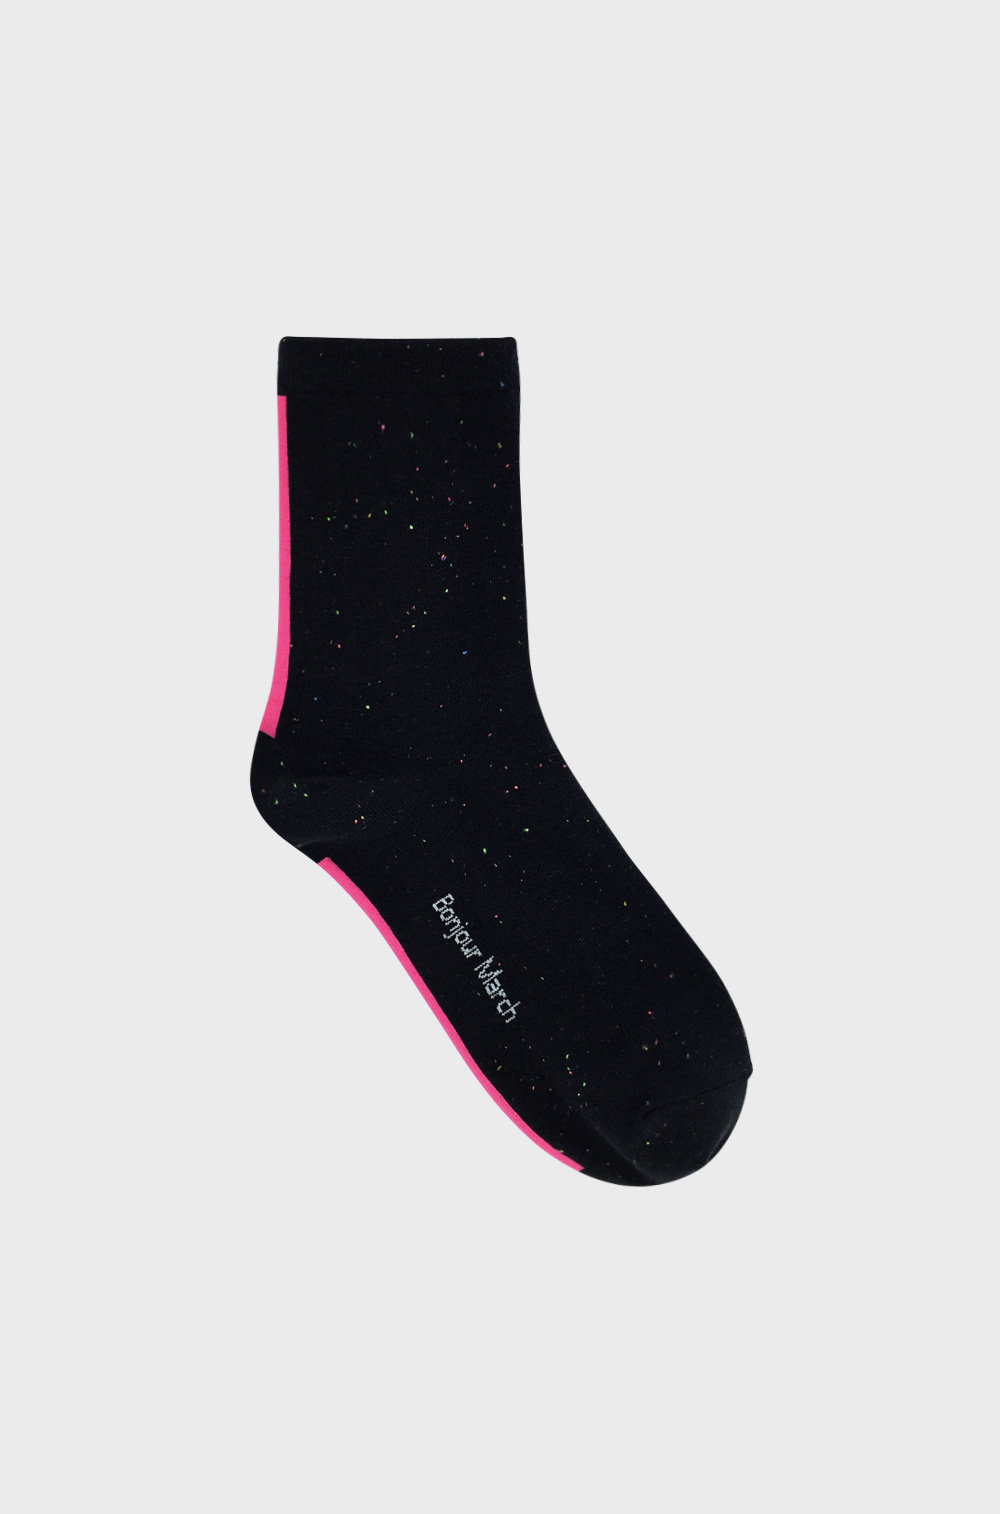 Milky way socks